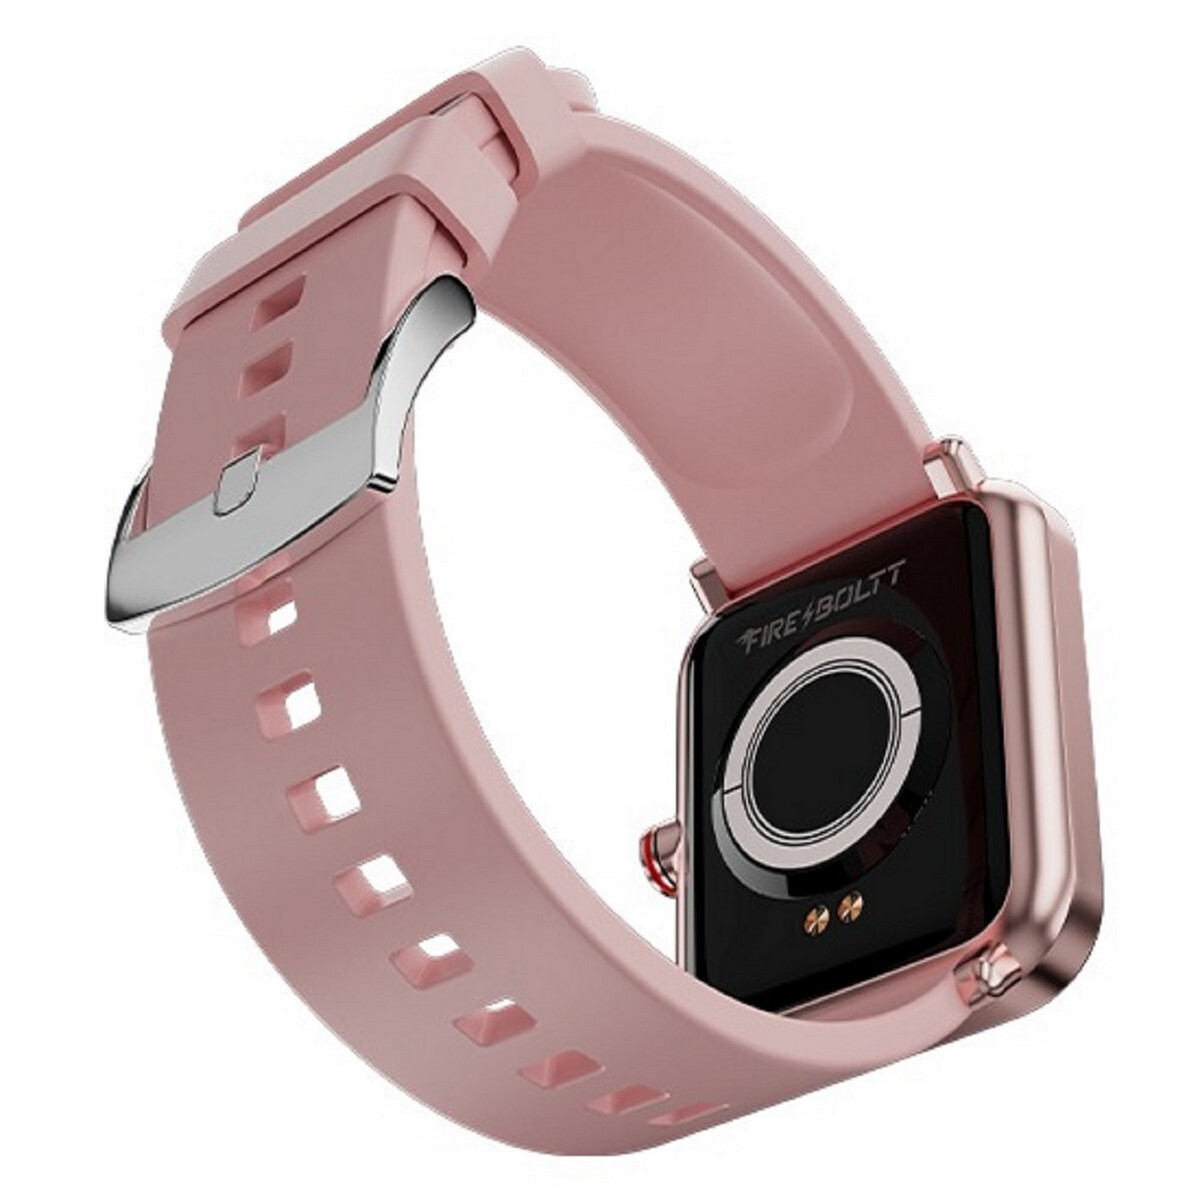 Firebolt Smart Watch Rebel BSW090 Pink